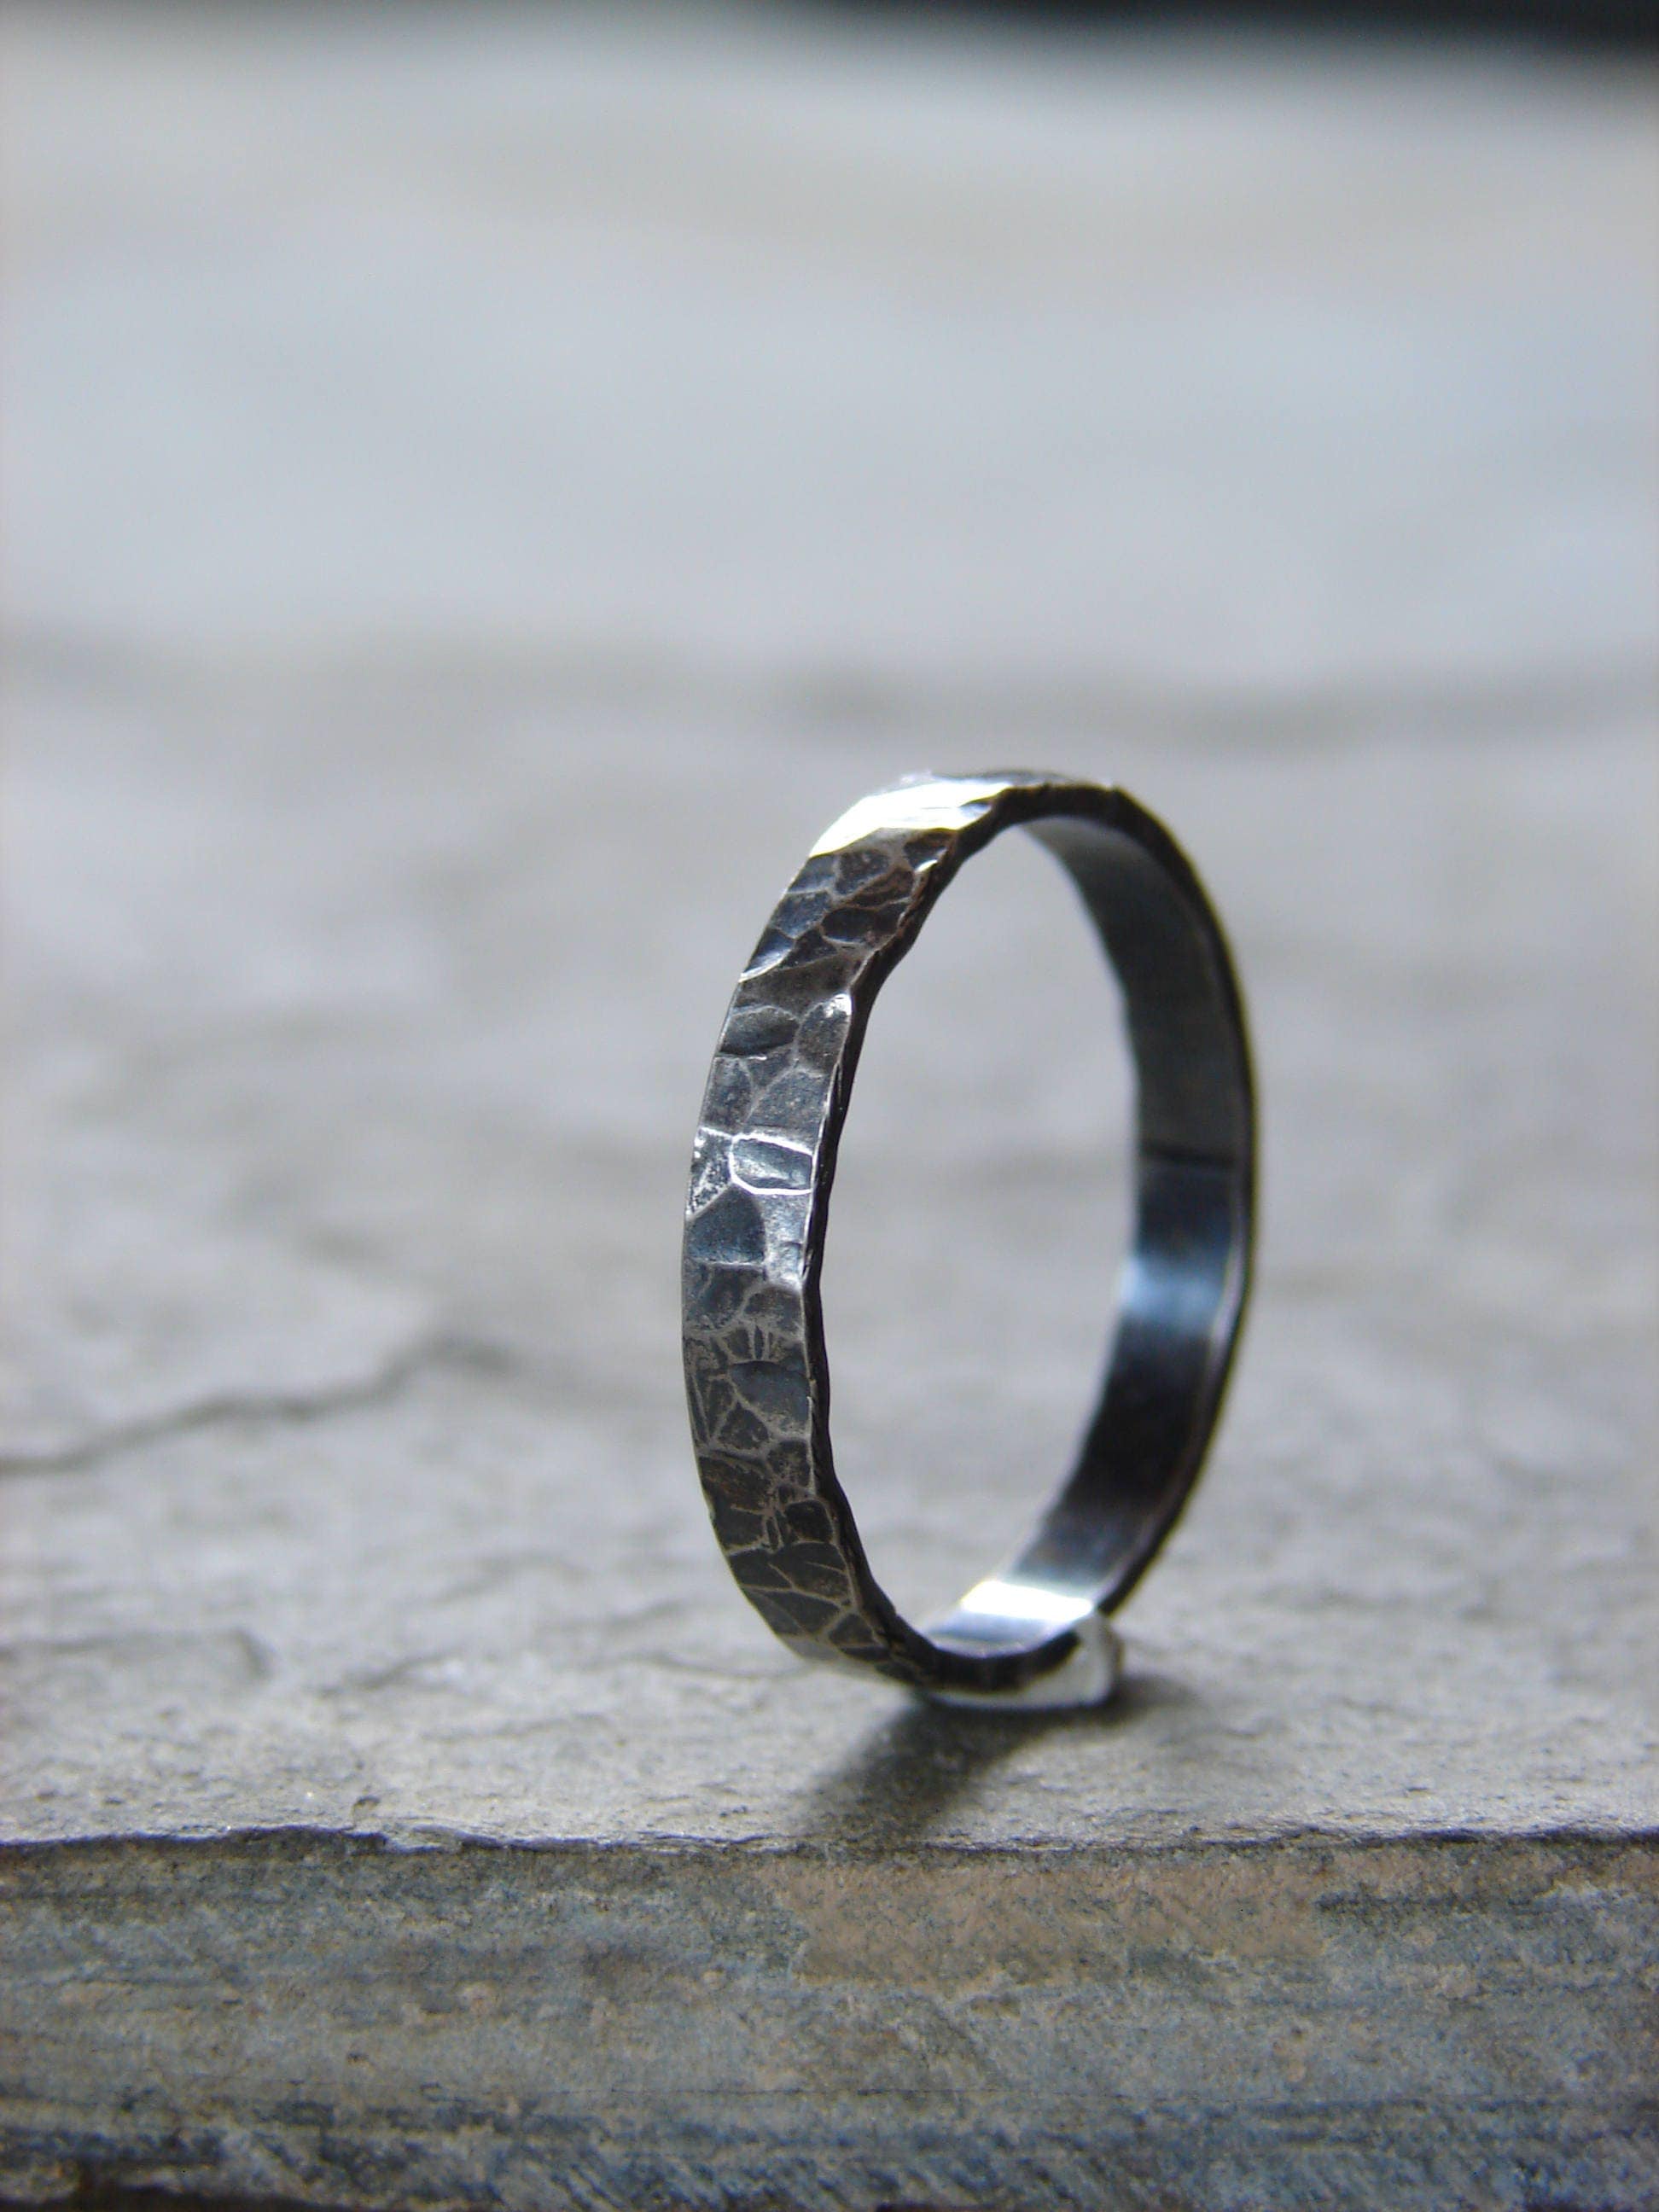 Does The Engagement Ring Size Matter? - xoNecole